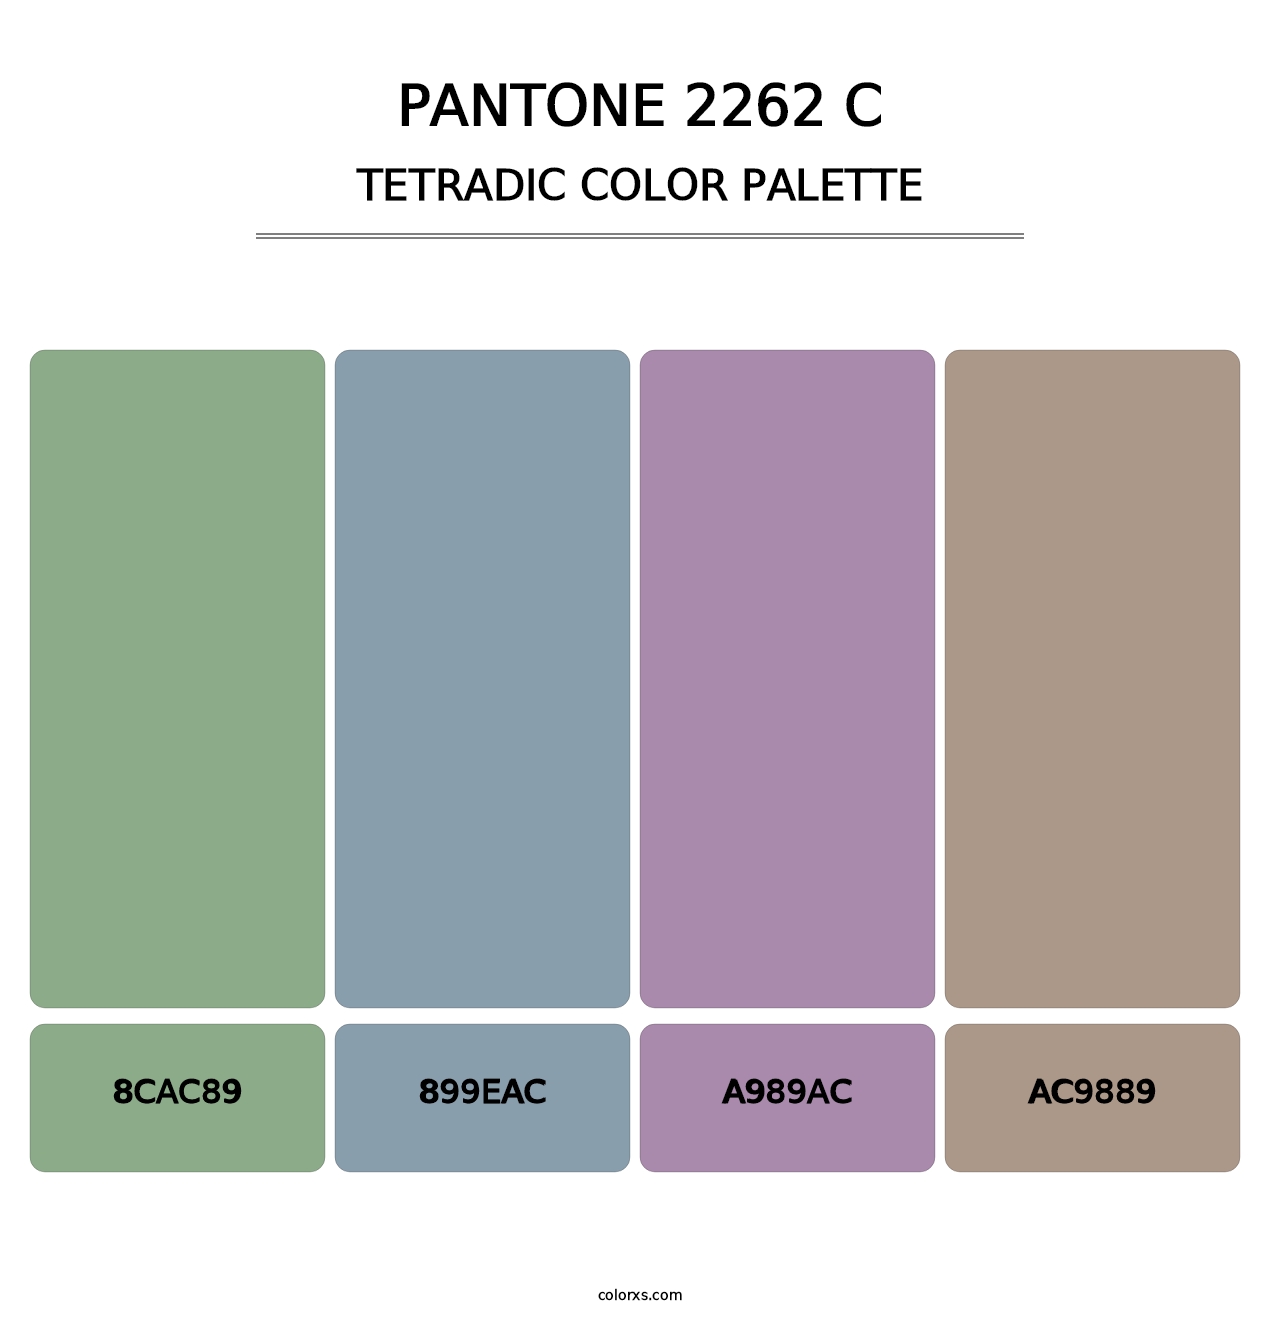 PANTONE 2262 C - Tetradic Color Palette